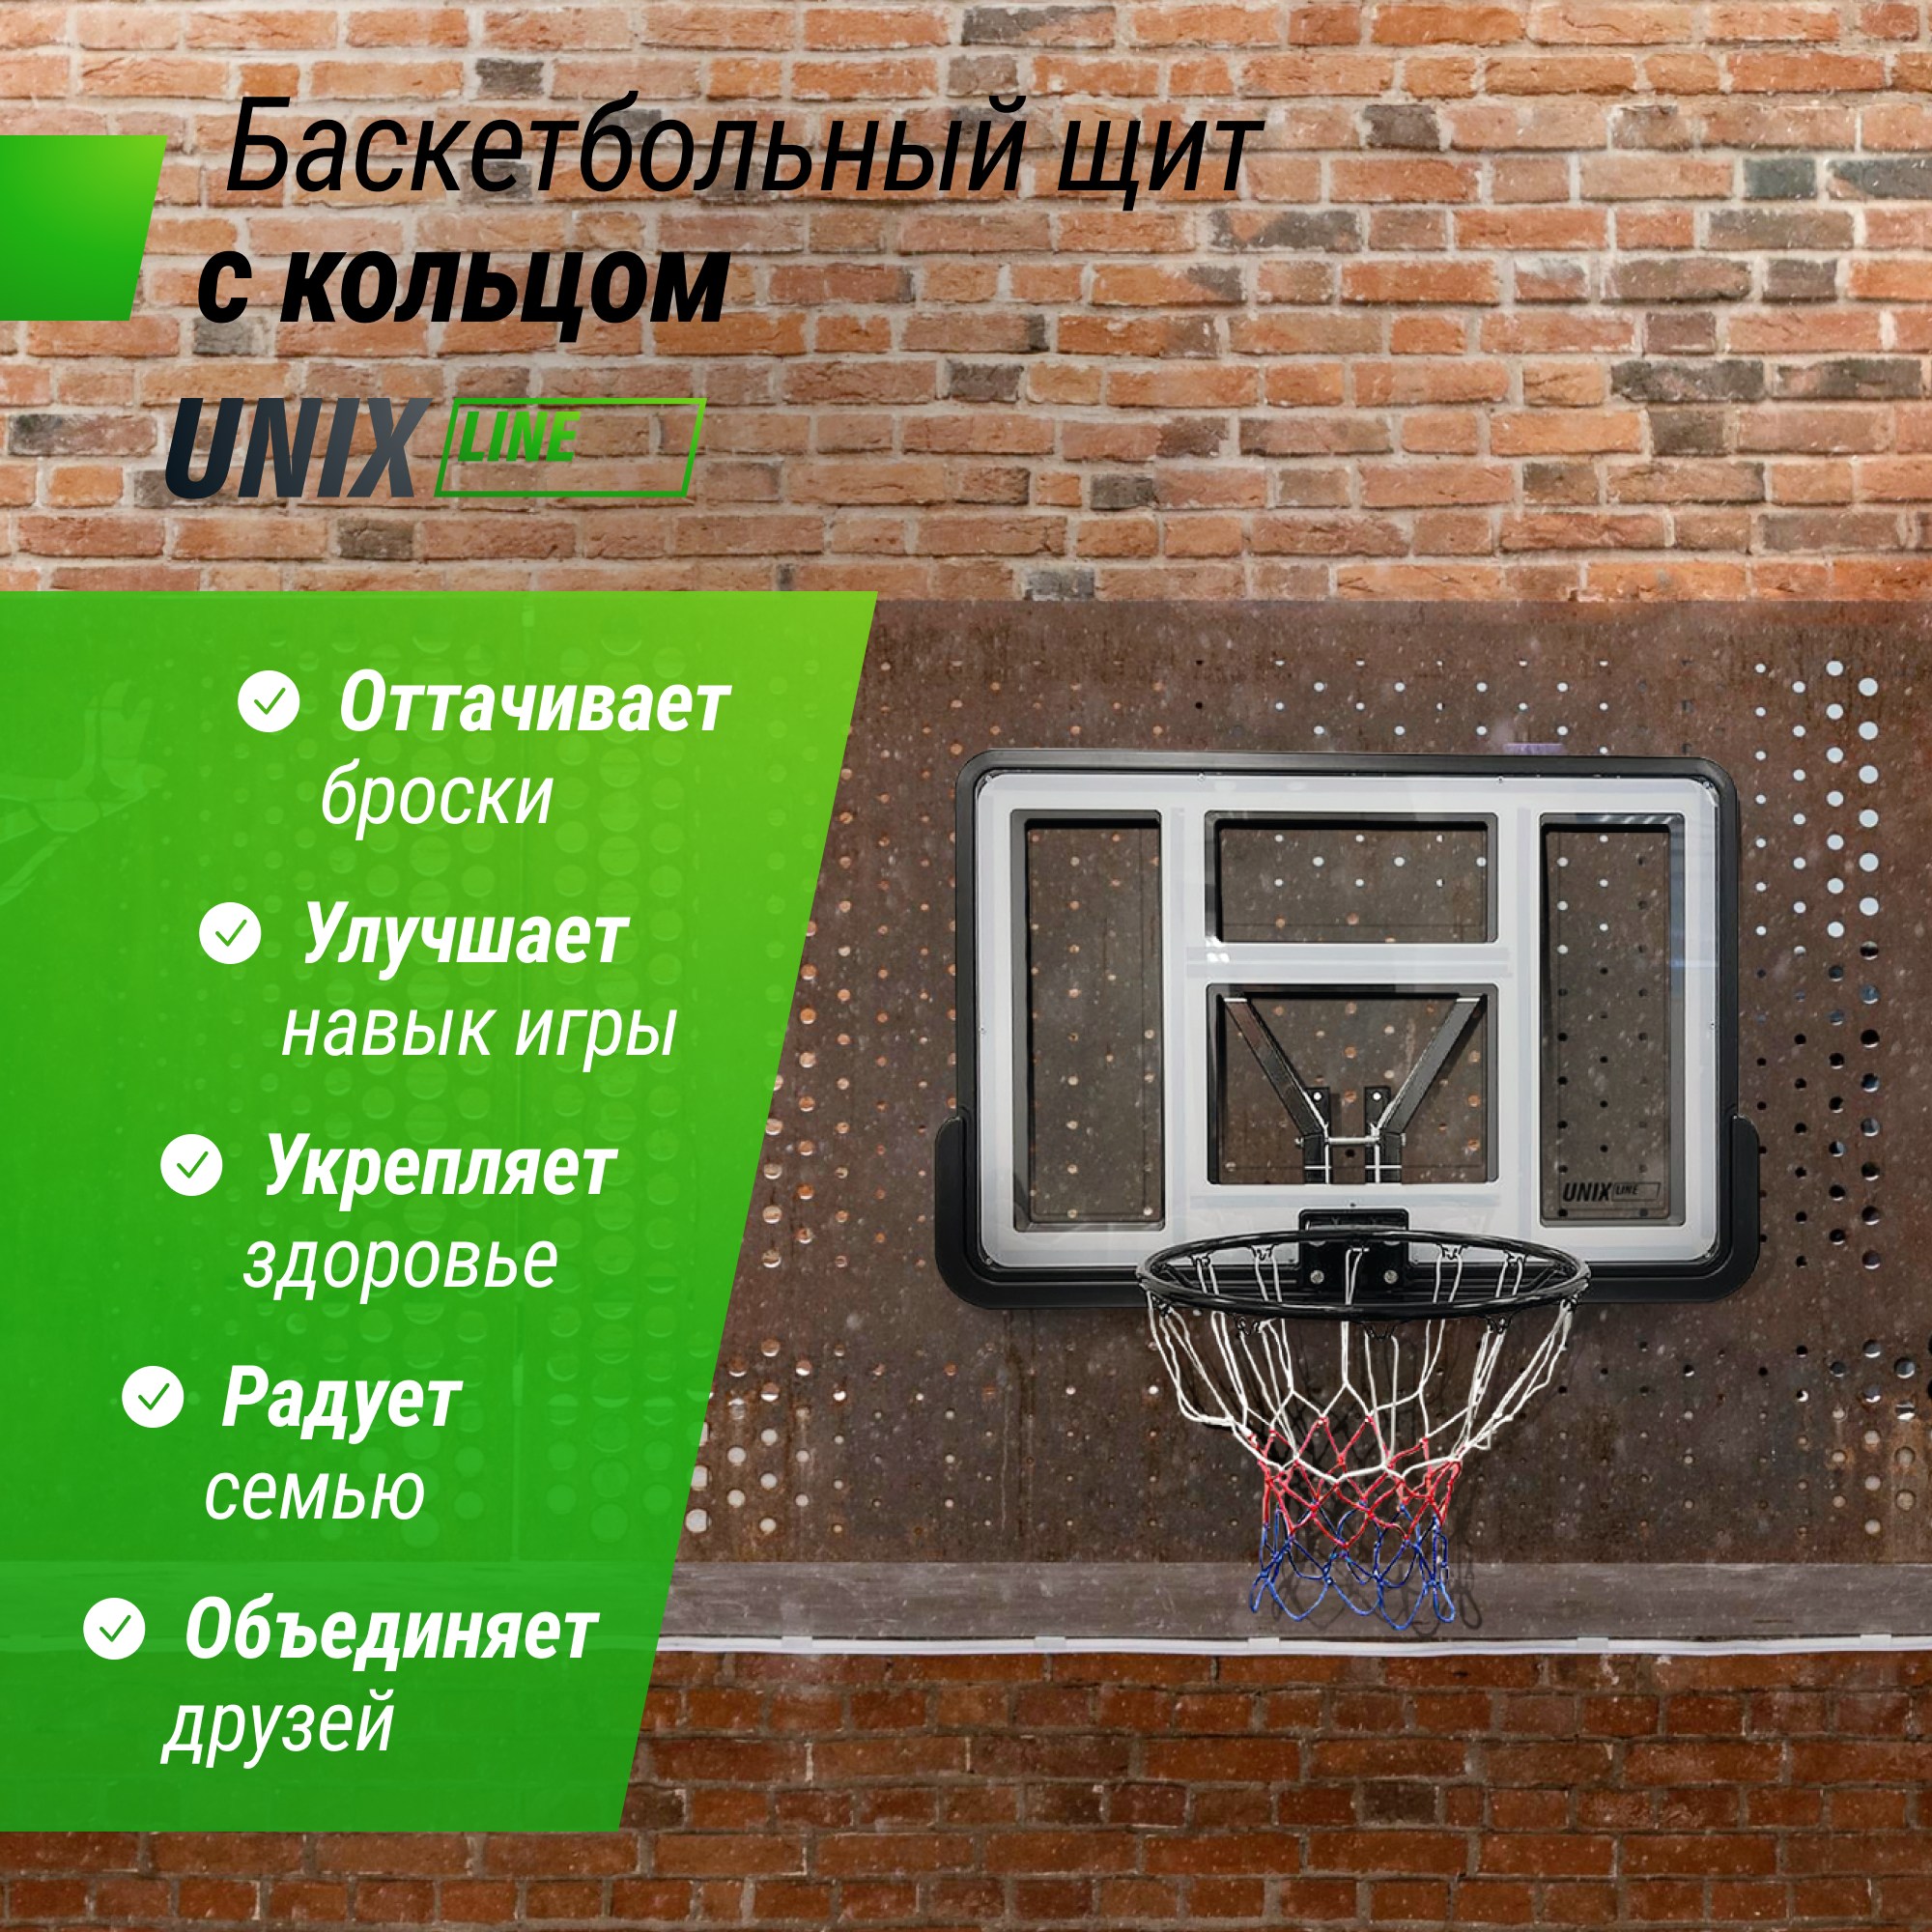 Баскетбольный щит Unix Line B-Backboard-PVC 44"x30" R45 BSBS44PVCBK 2000_2000